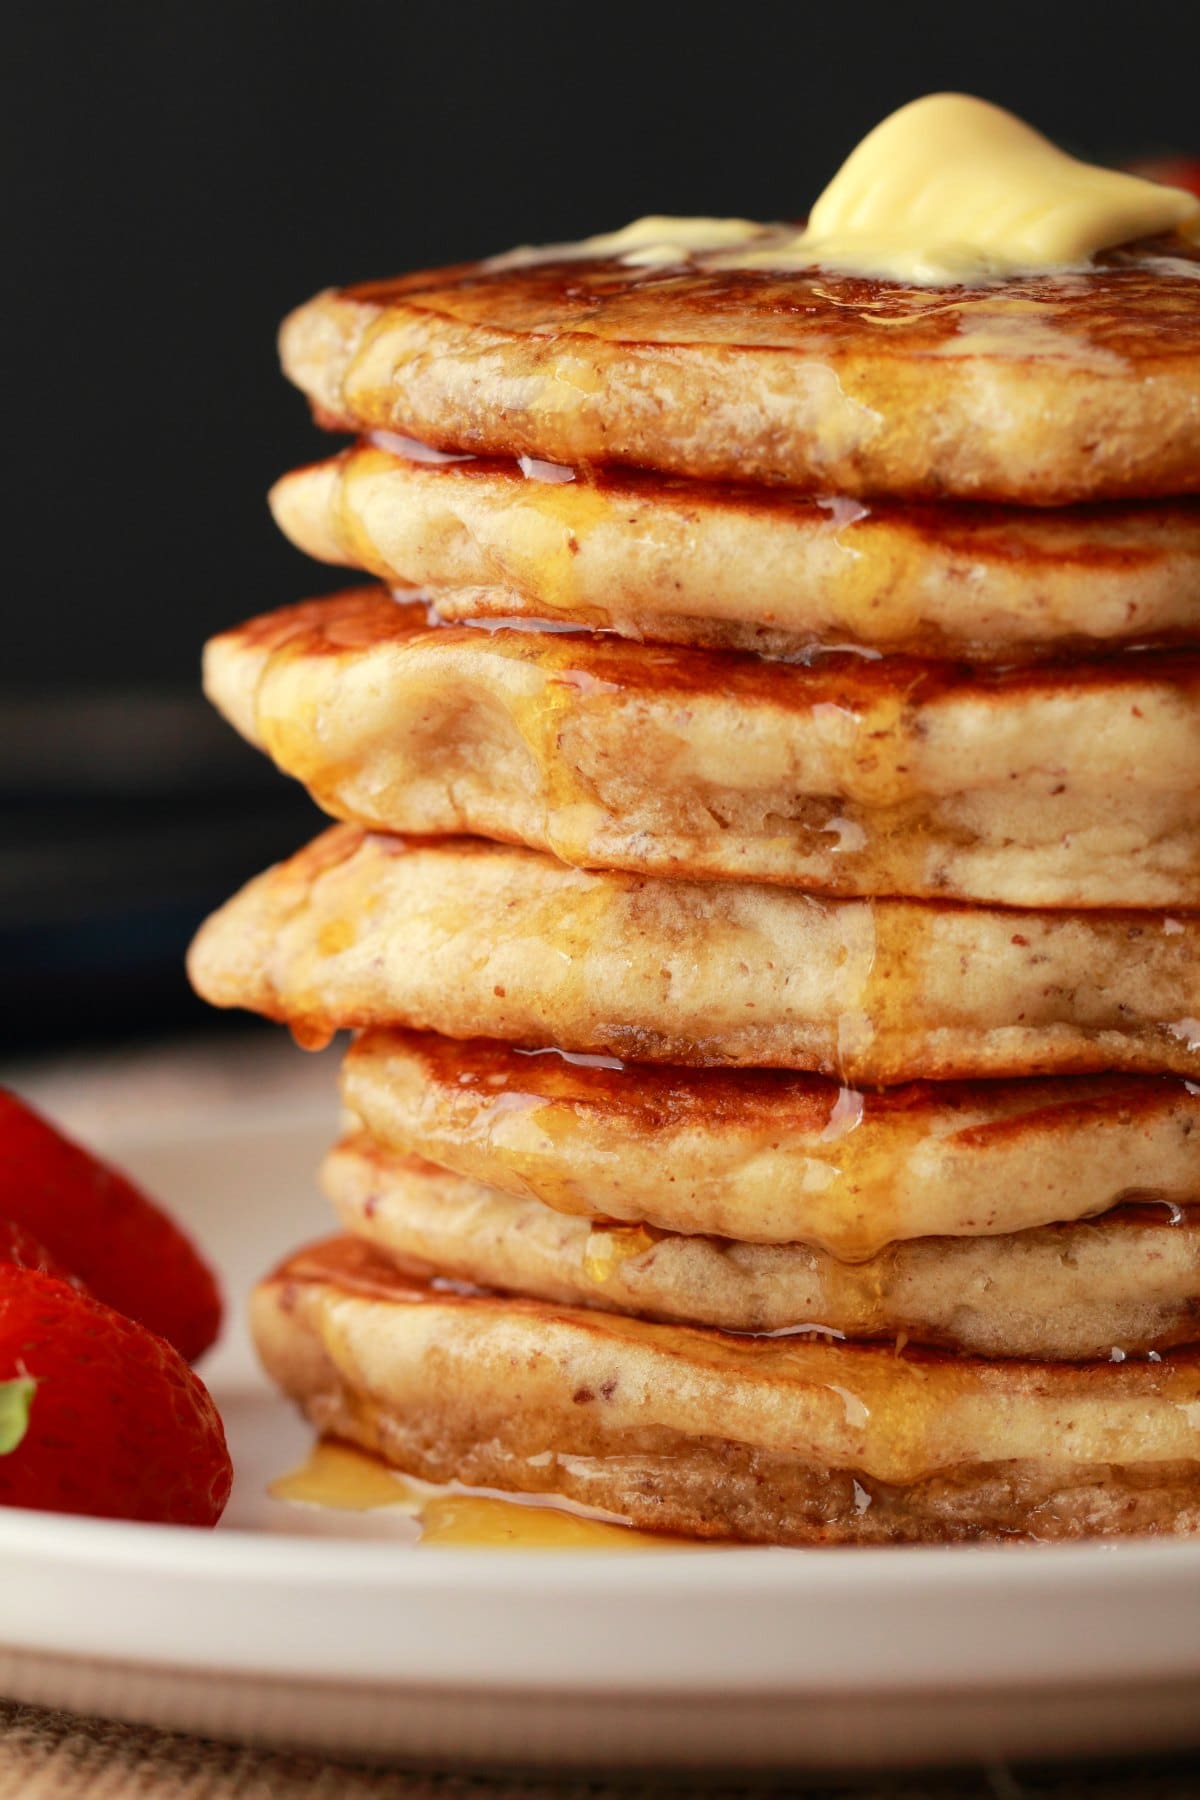 20 Amazing Vegan Pancake Recipes to Dive Into!